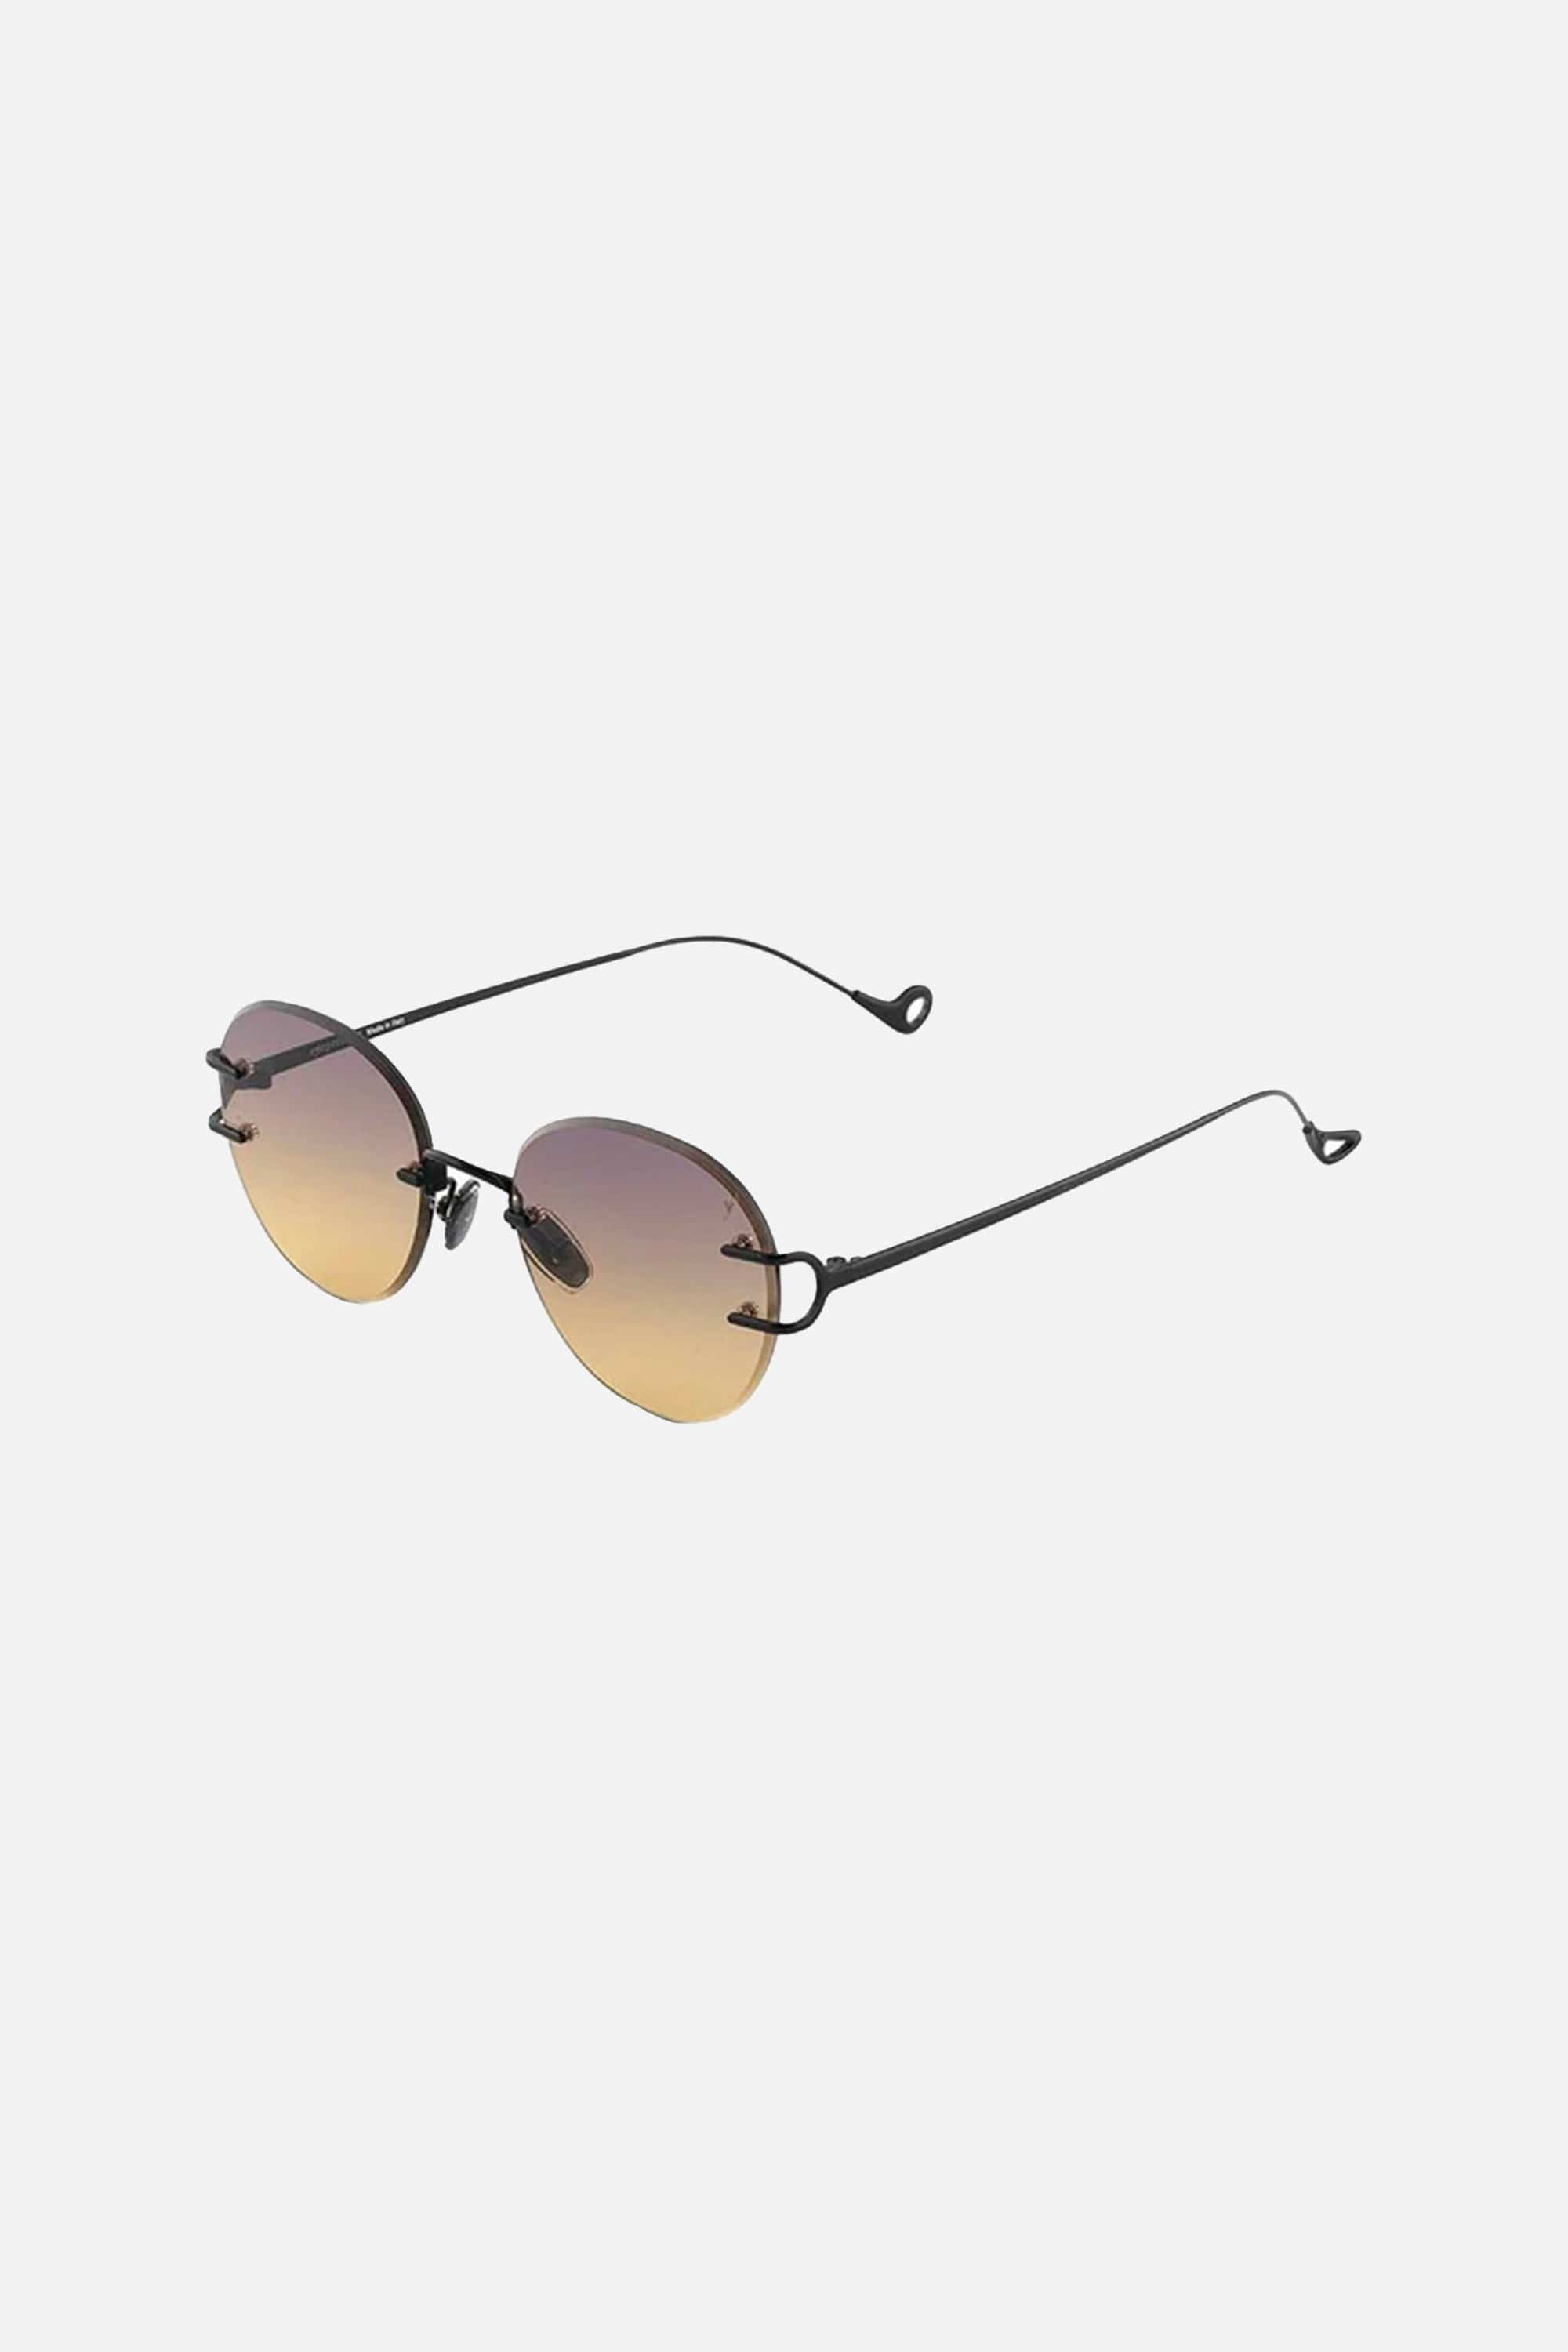 Eyepetizer round black rimless sunglasses - Eyewear Club